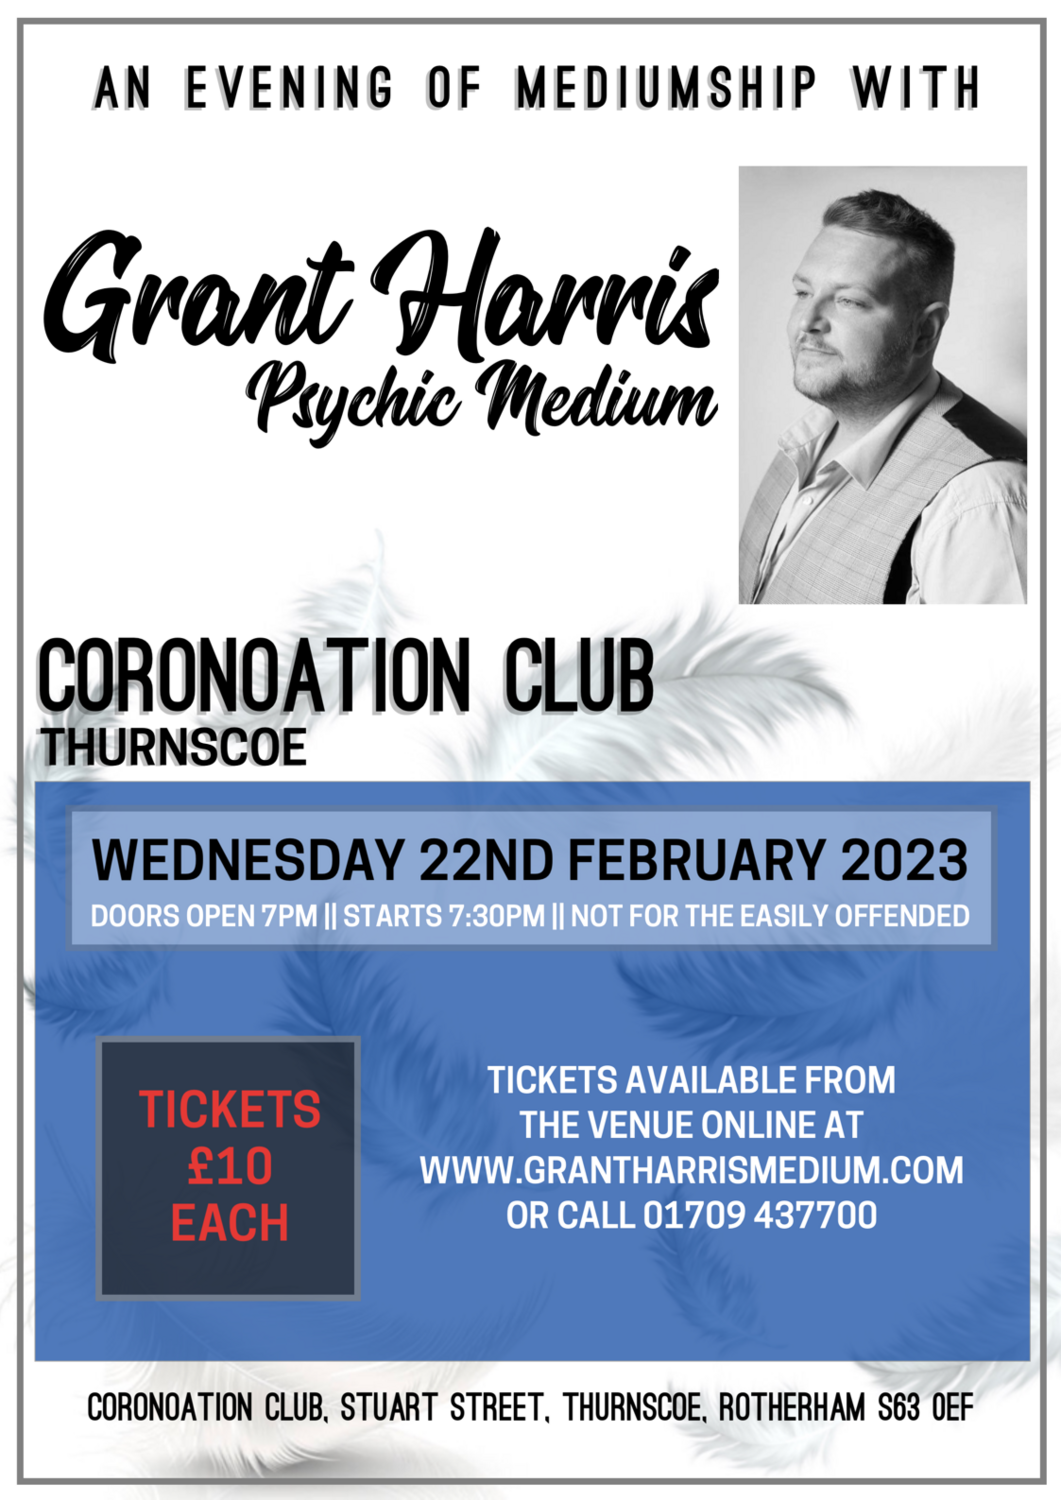 Coronation Club, Thurnscoe, Rotherham, Wednesday 22nd February 2023